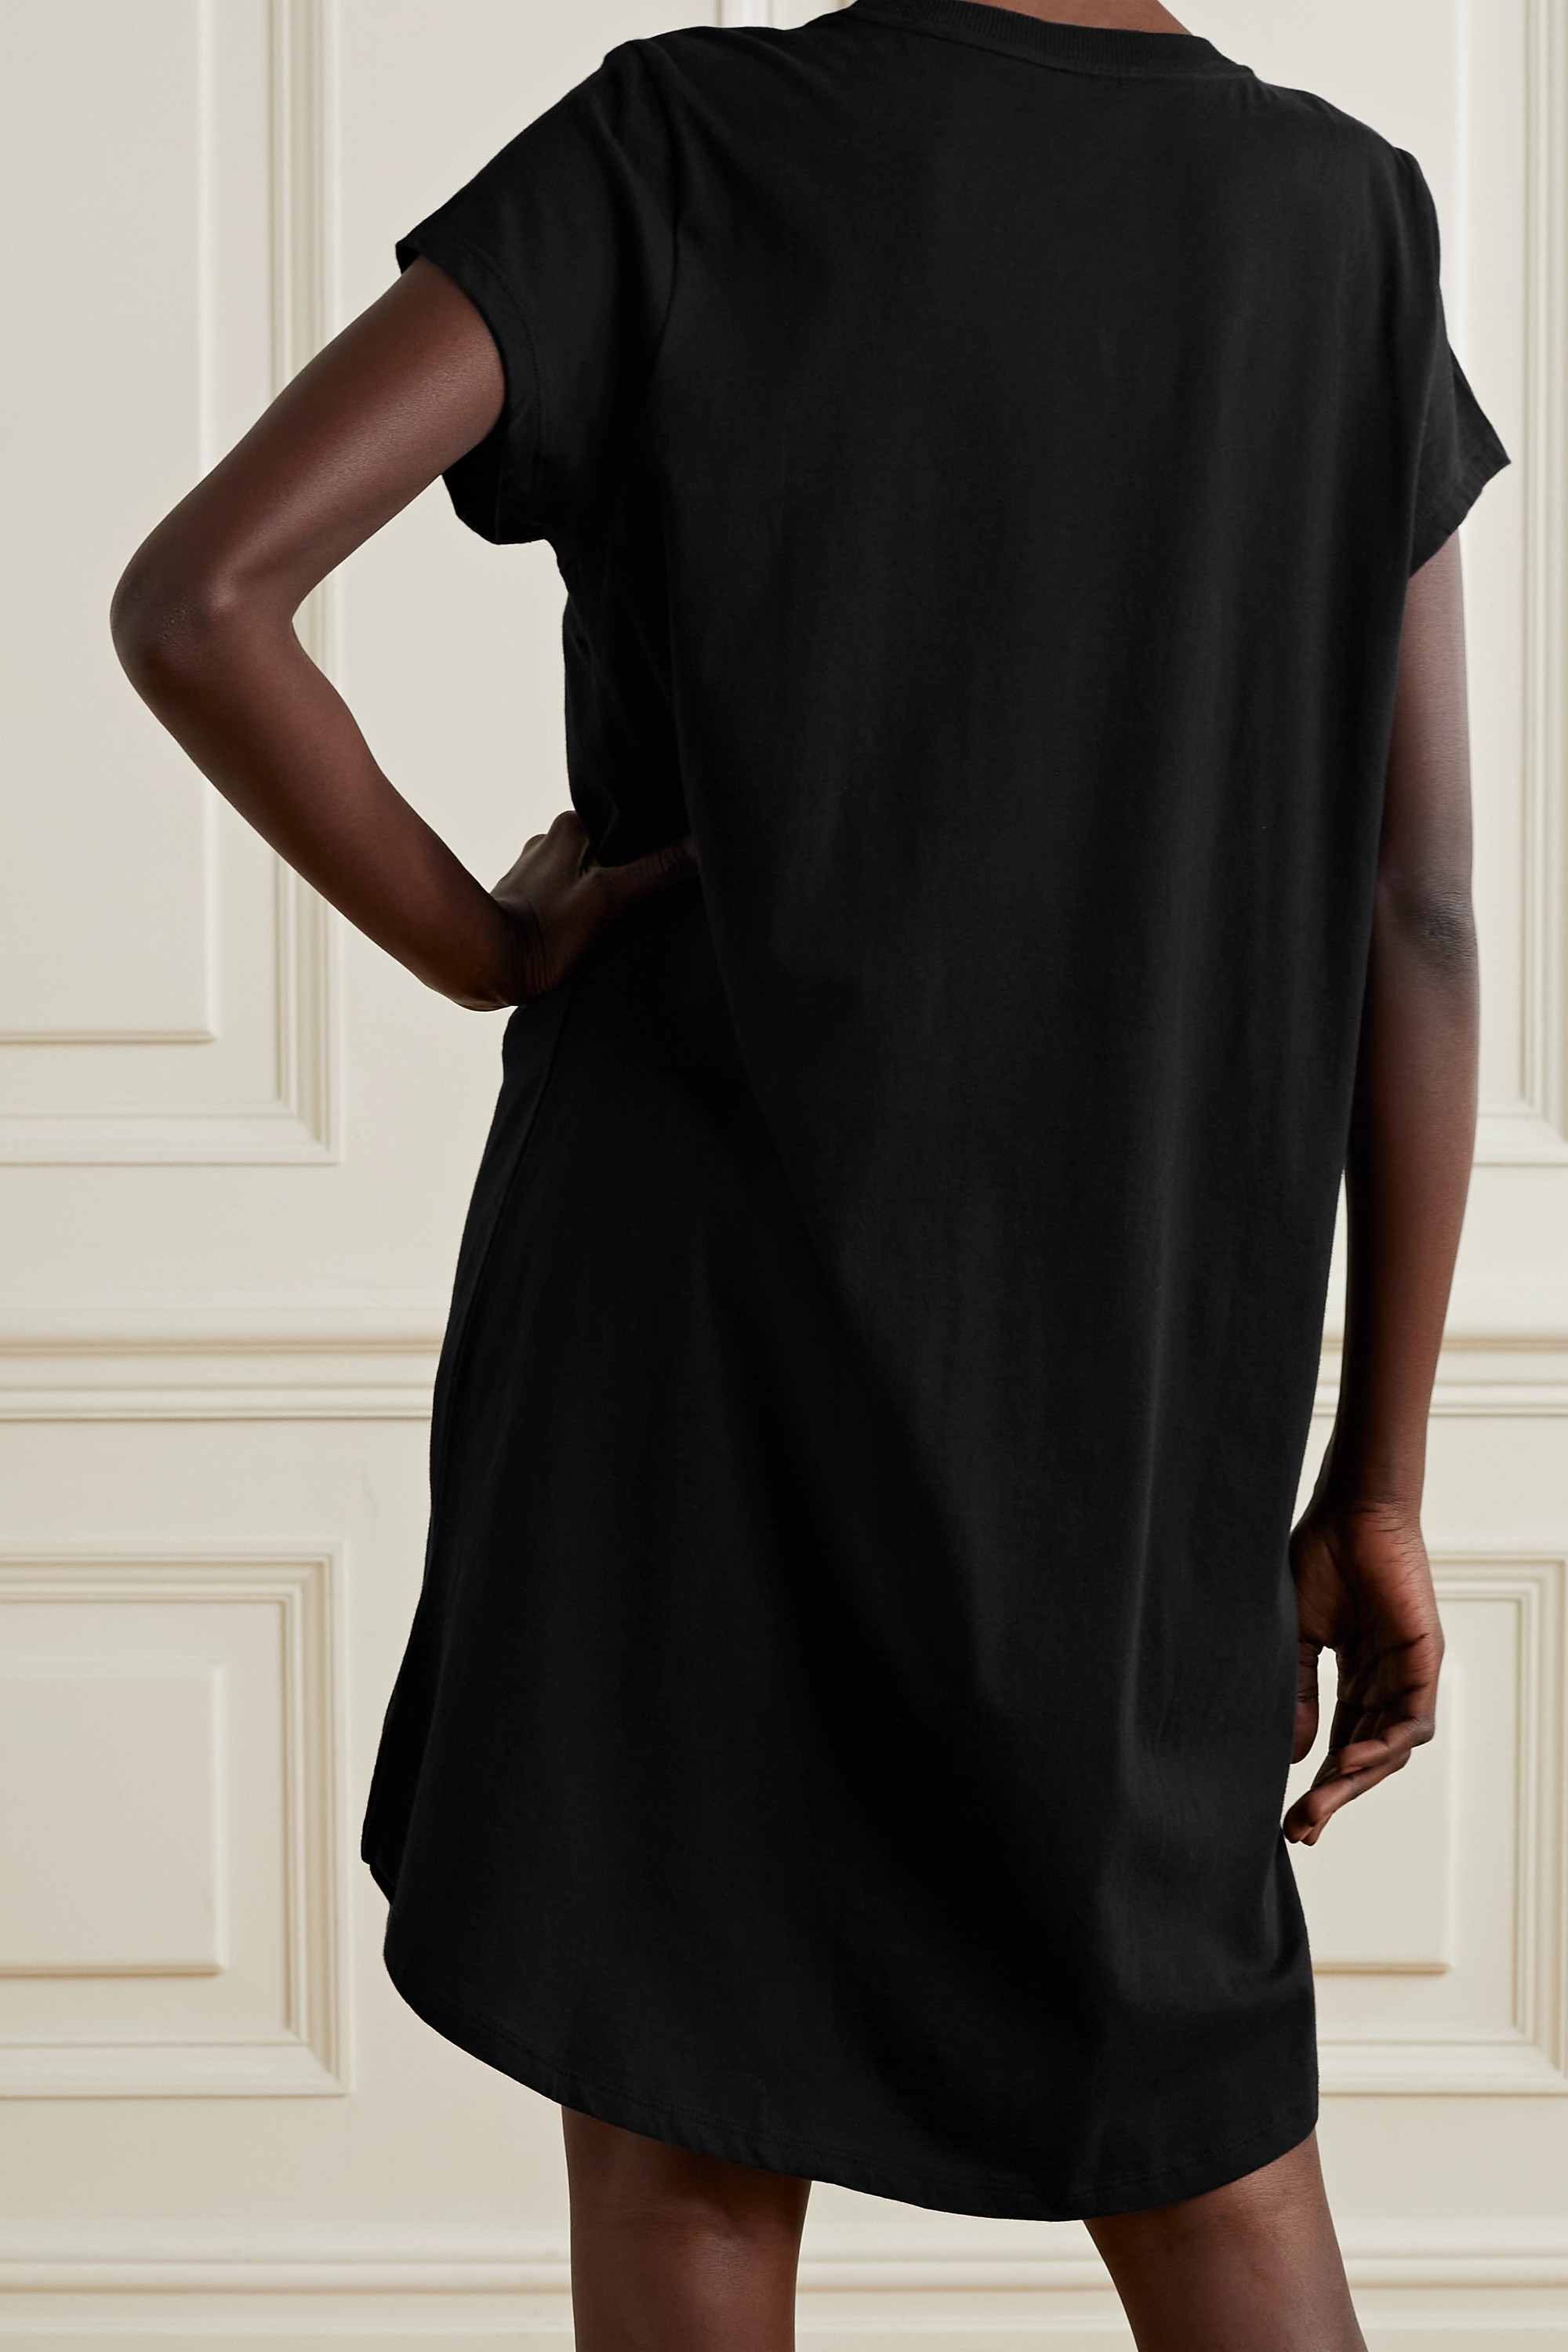 SKIN + NET SUSTAIN Ночная рубашка Carissa из органического хлопкового джерси Pima, черный kowalski dougherty carissa jewelry design